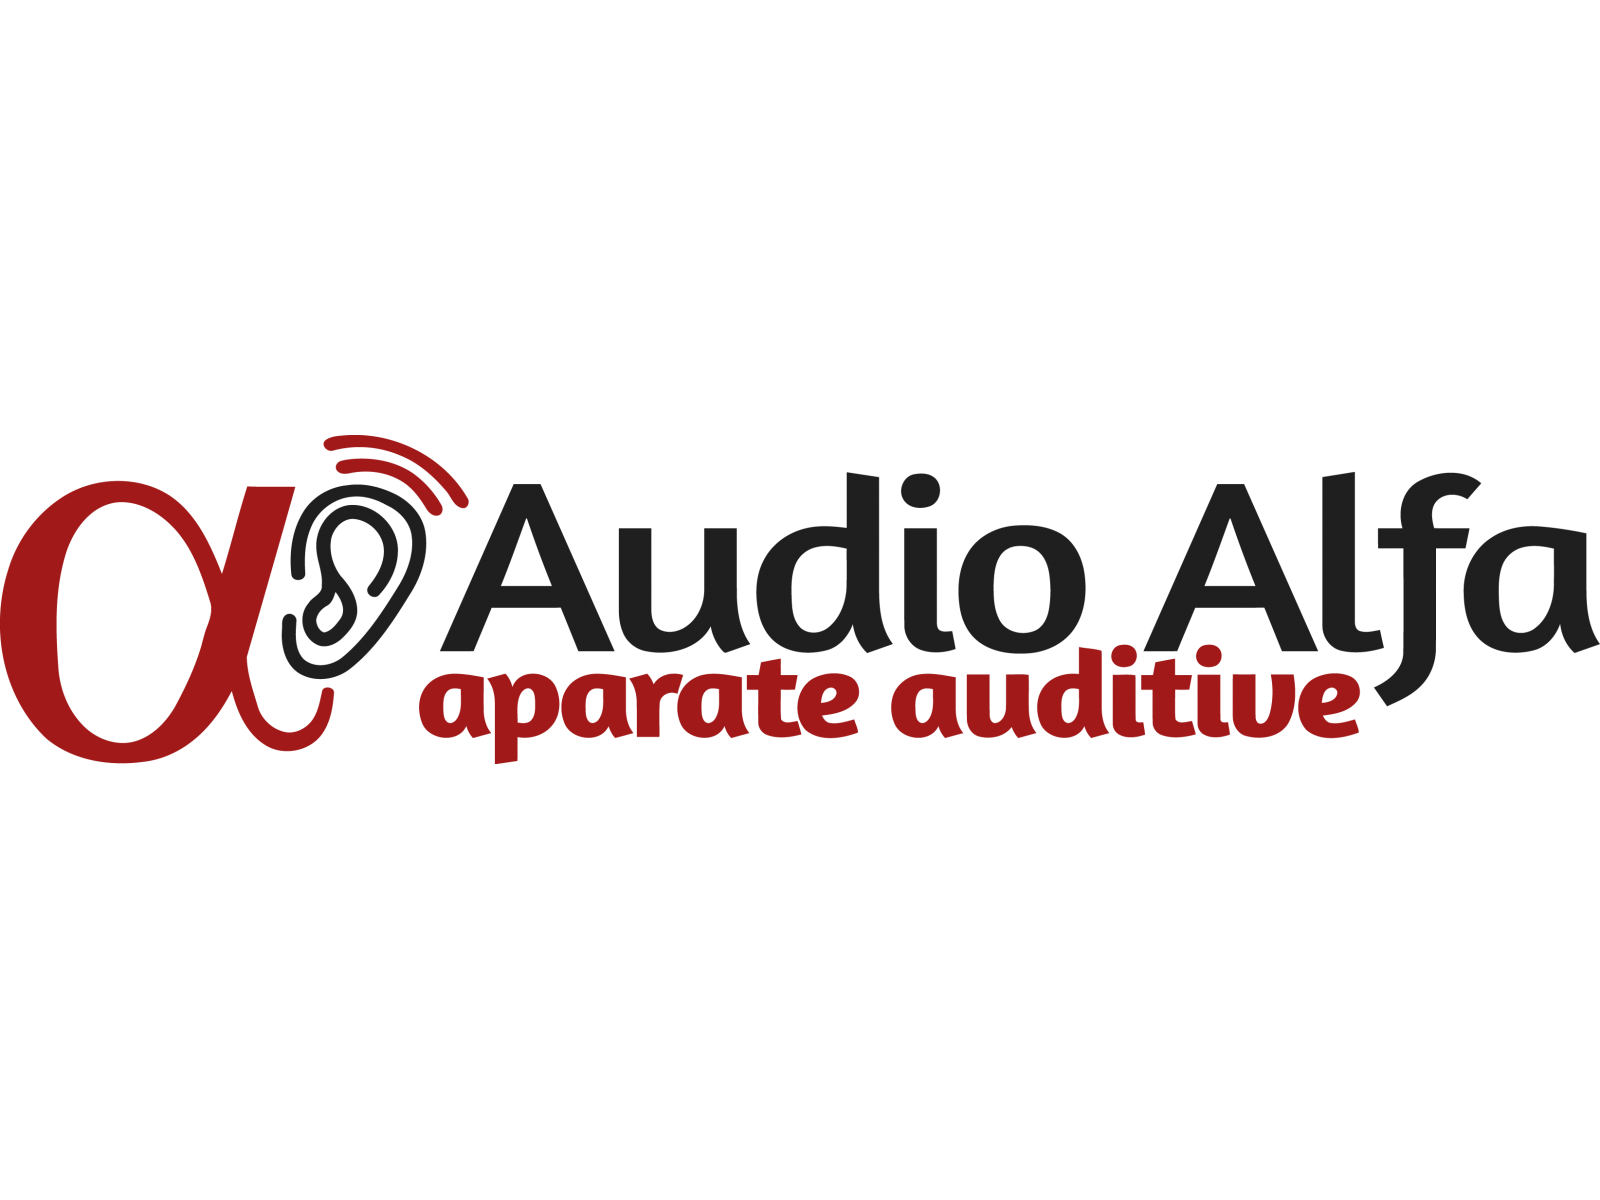 Aparate Auditive -Audio Alfa - aaa2.png